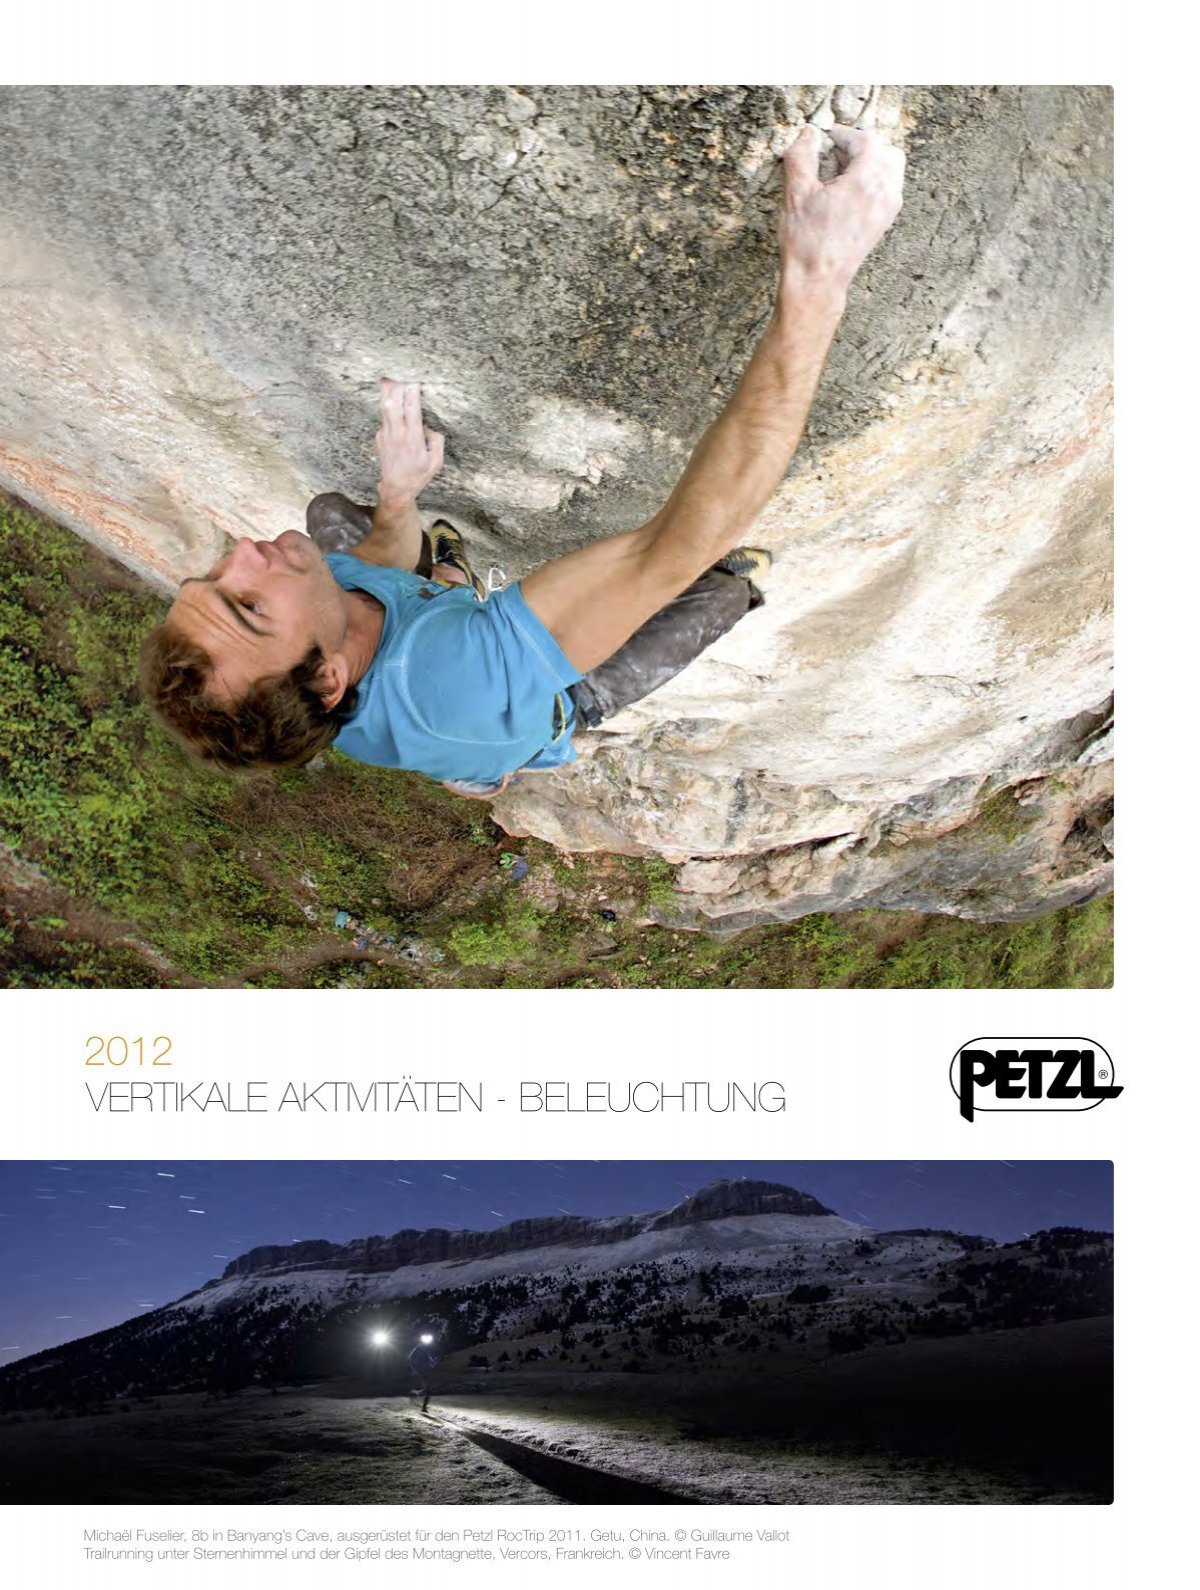 Petzl Sport Katalog 2012 PDF herunterladen - Krah.com